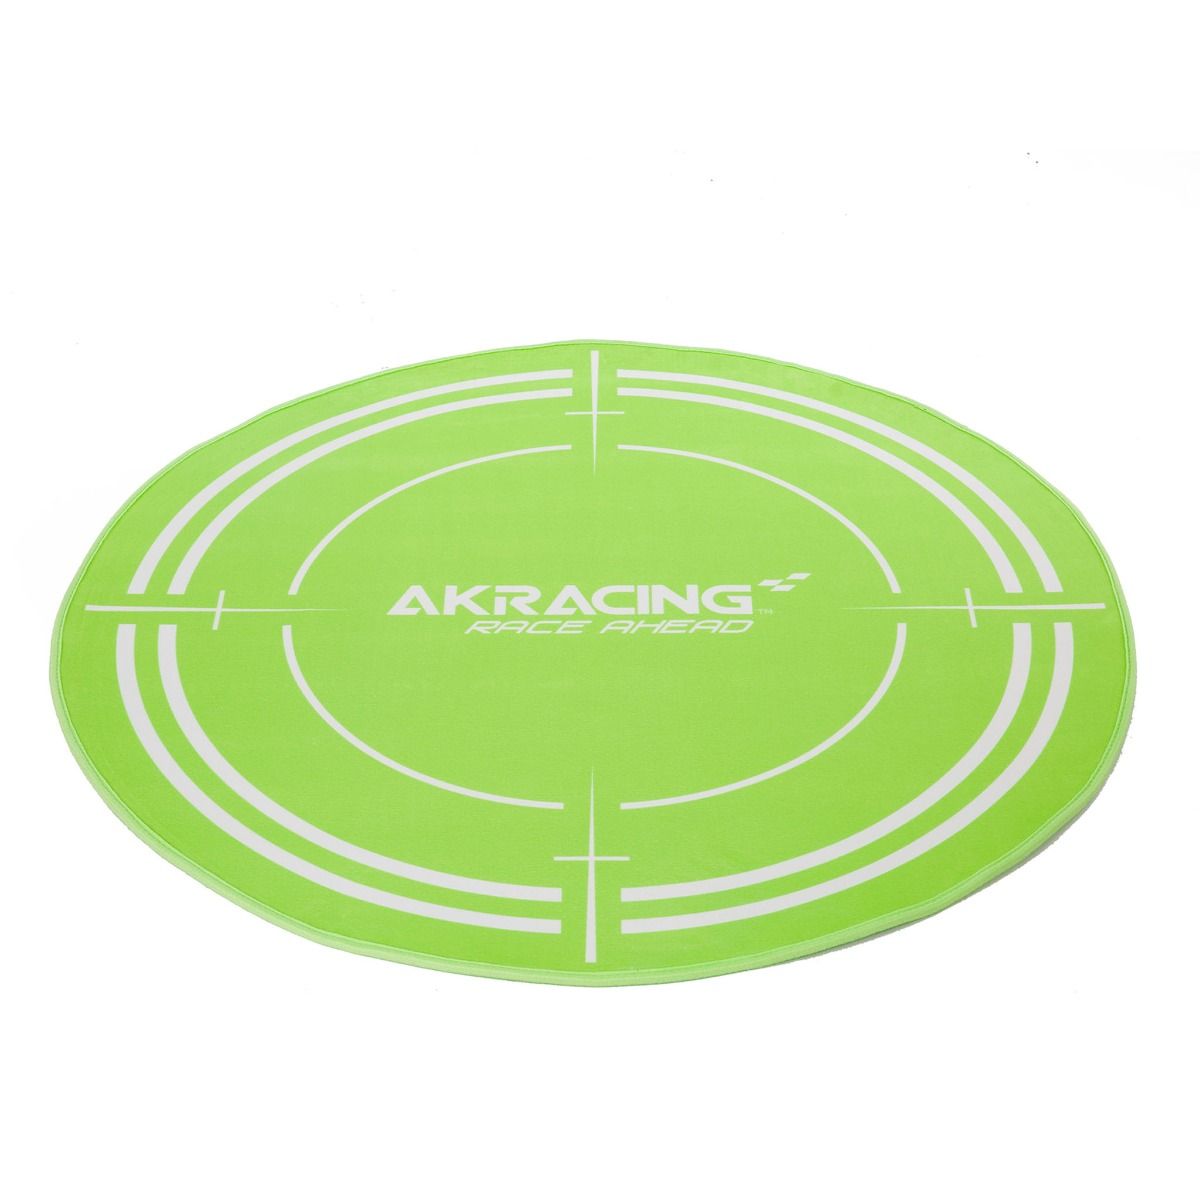 AK Racing Circular Chair Floor Mat - Green